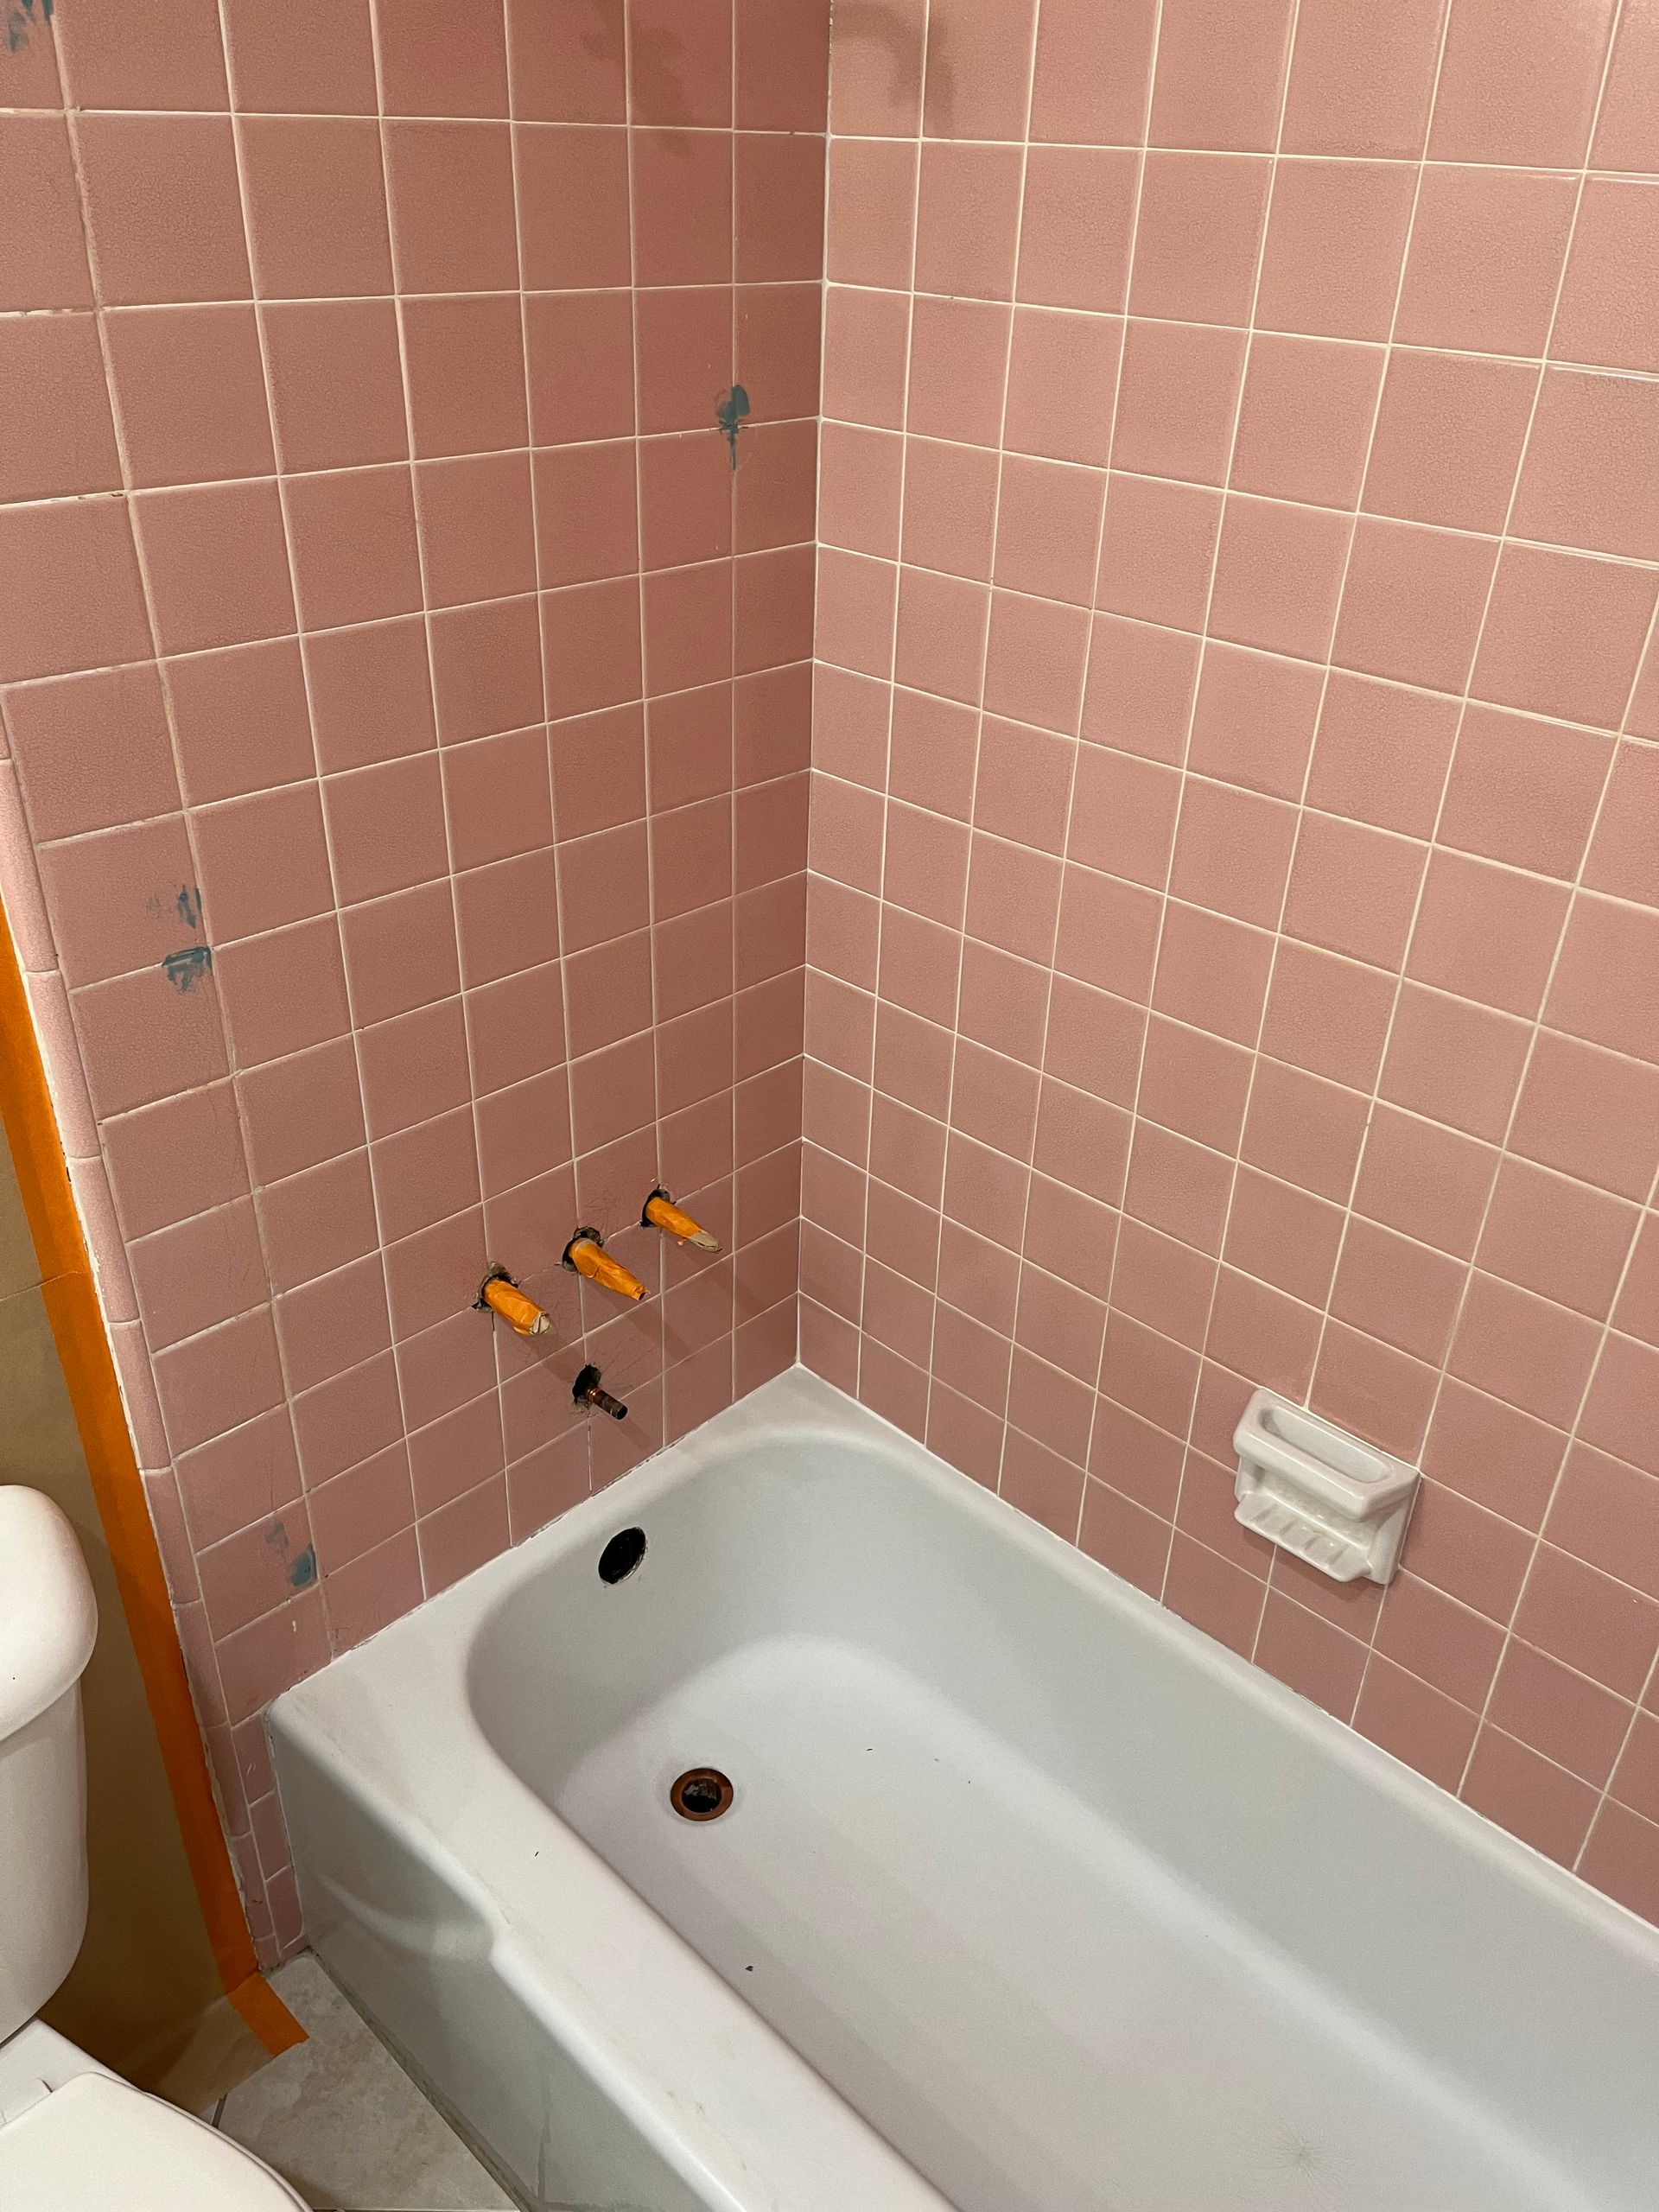 A bathroom with pink tiles and a bathtub